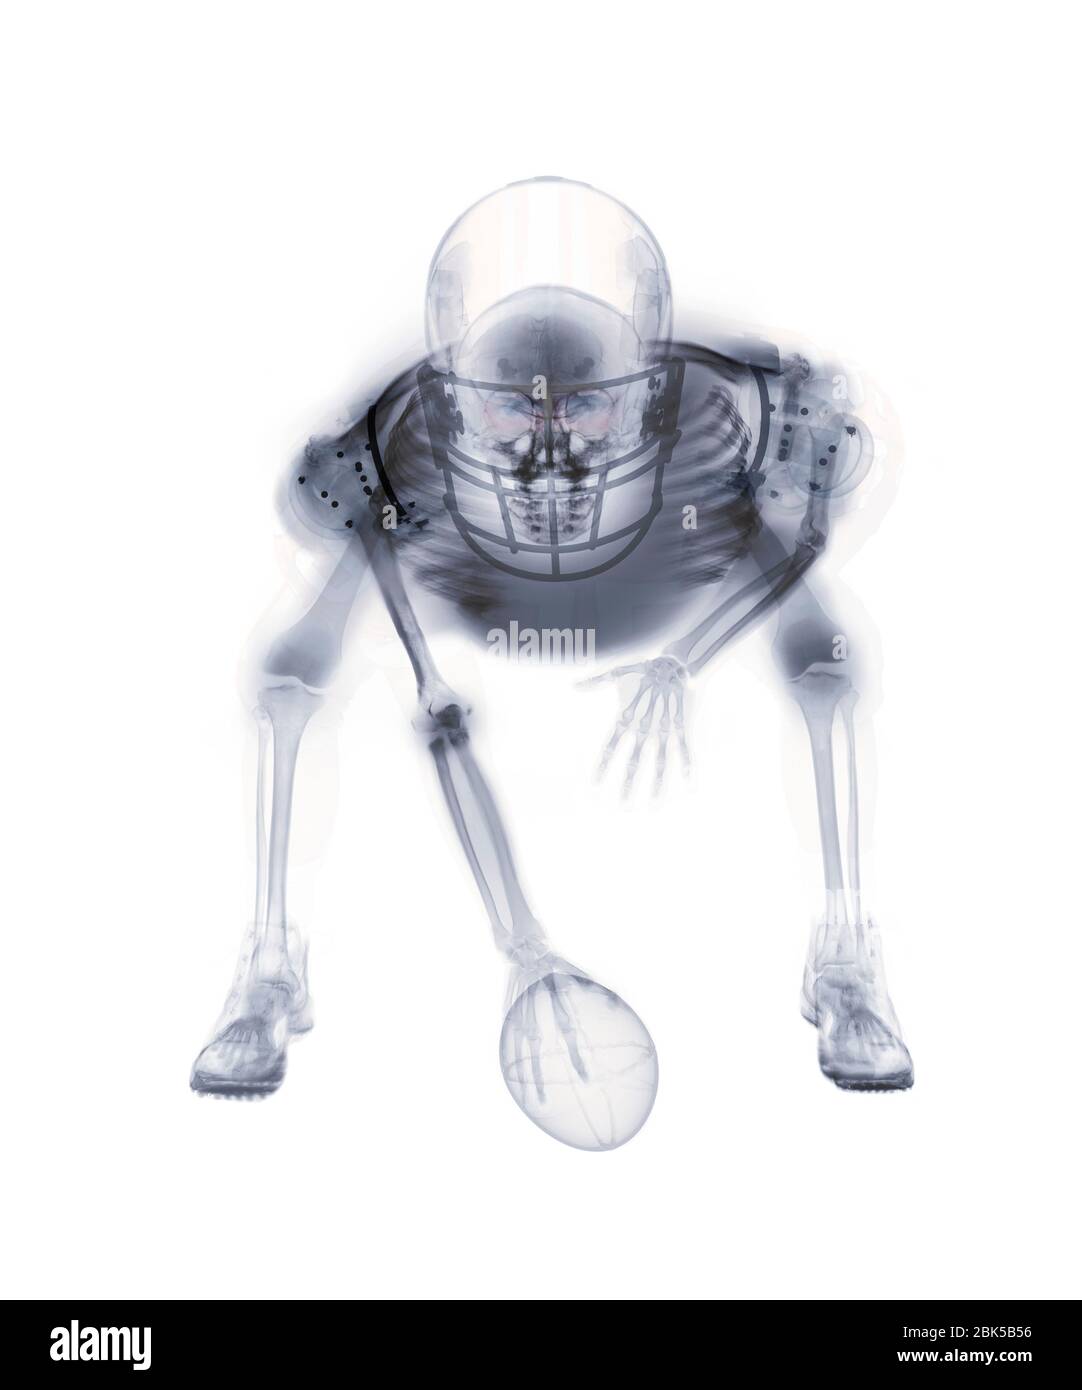 American football player skeleton, X-ray. Stock Photo